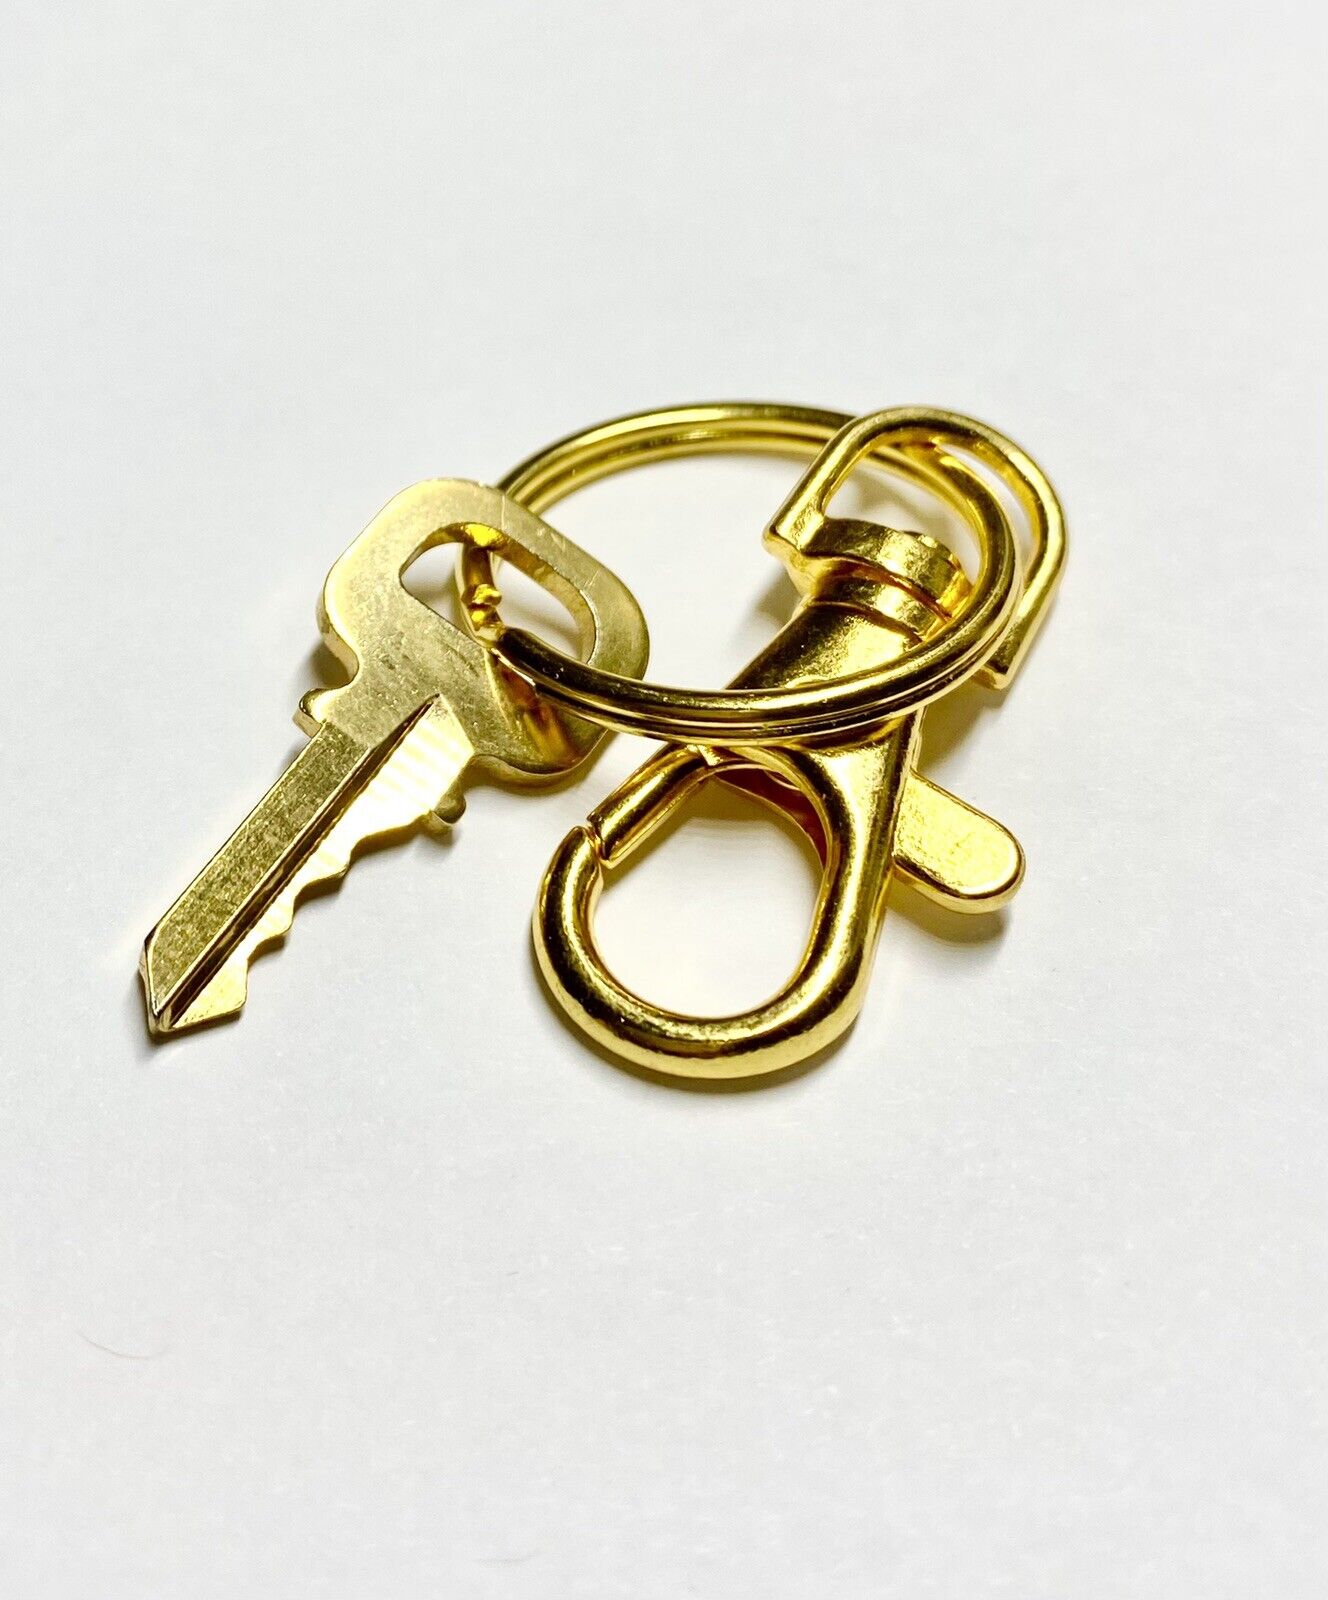 Louis Vuitton Key 322 Brass Goldtone